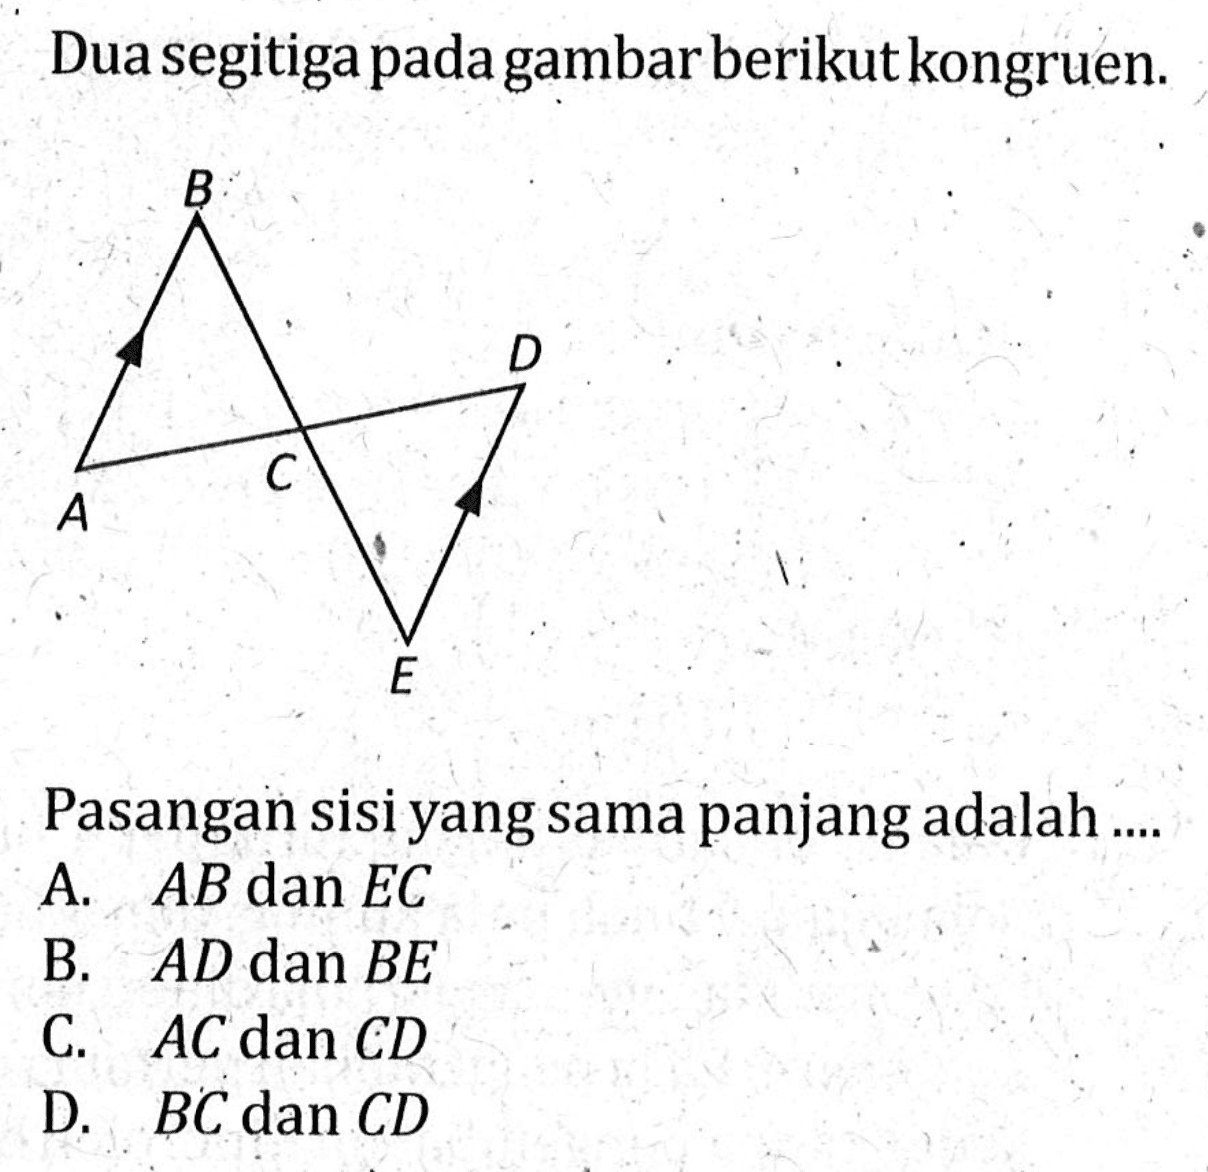 Dua segitiga pada gambar berikut kongruen.Pasangan sisi yang sama panjang adalah ....A. AB dan EC B. AD dan BE C. AC dan CD D. BC dan CD 